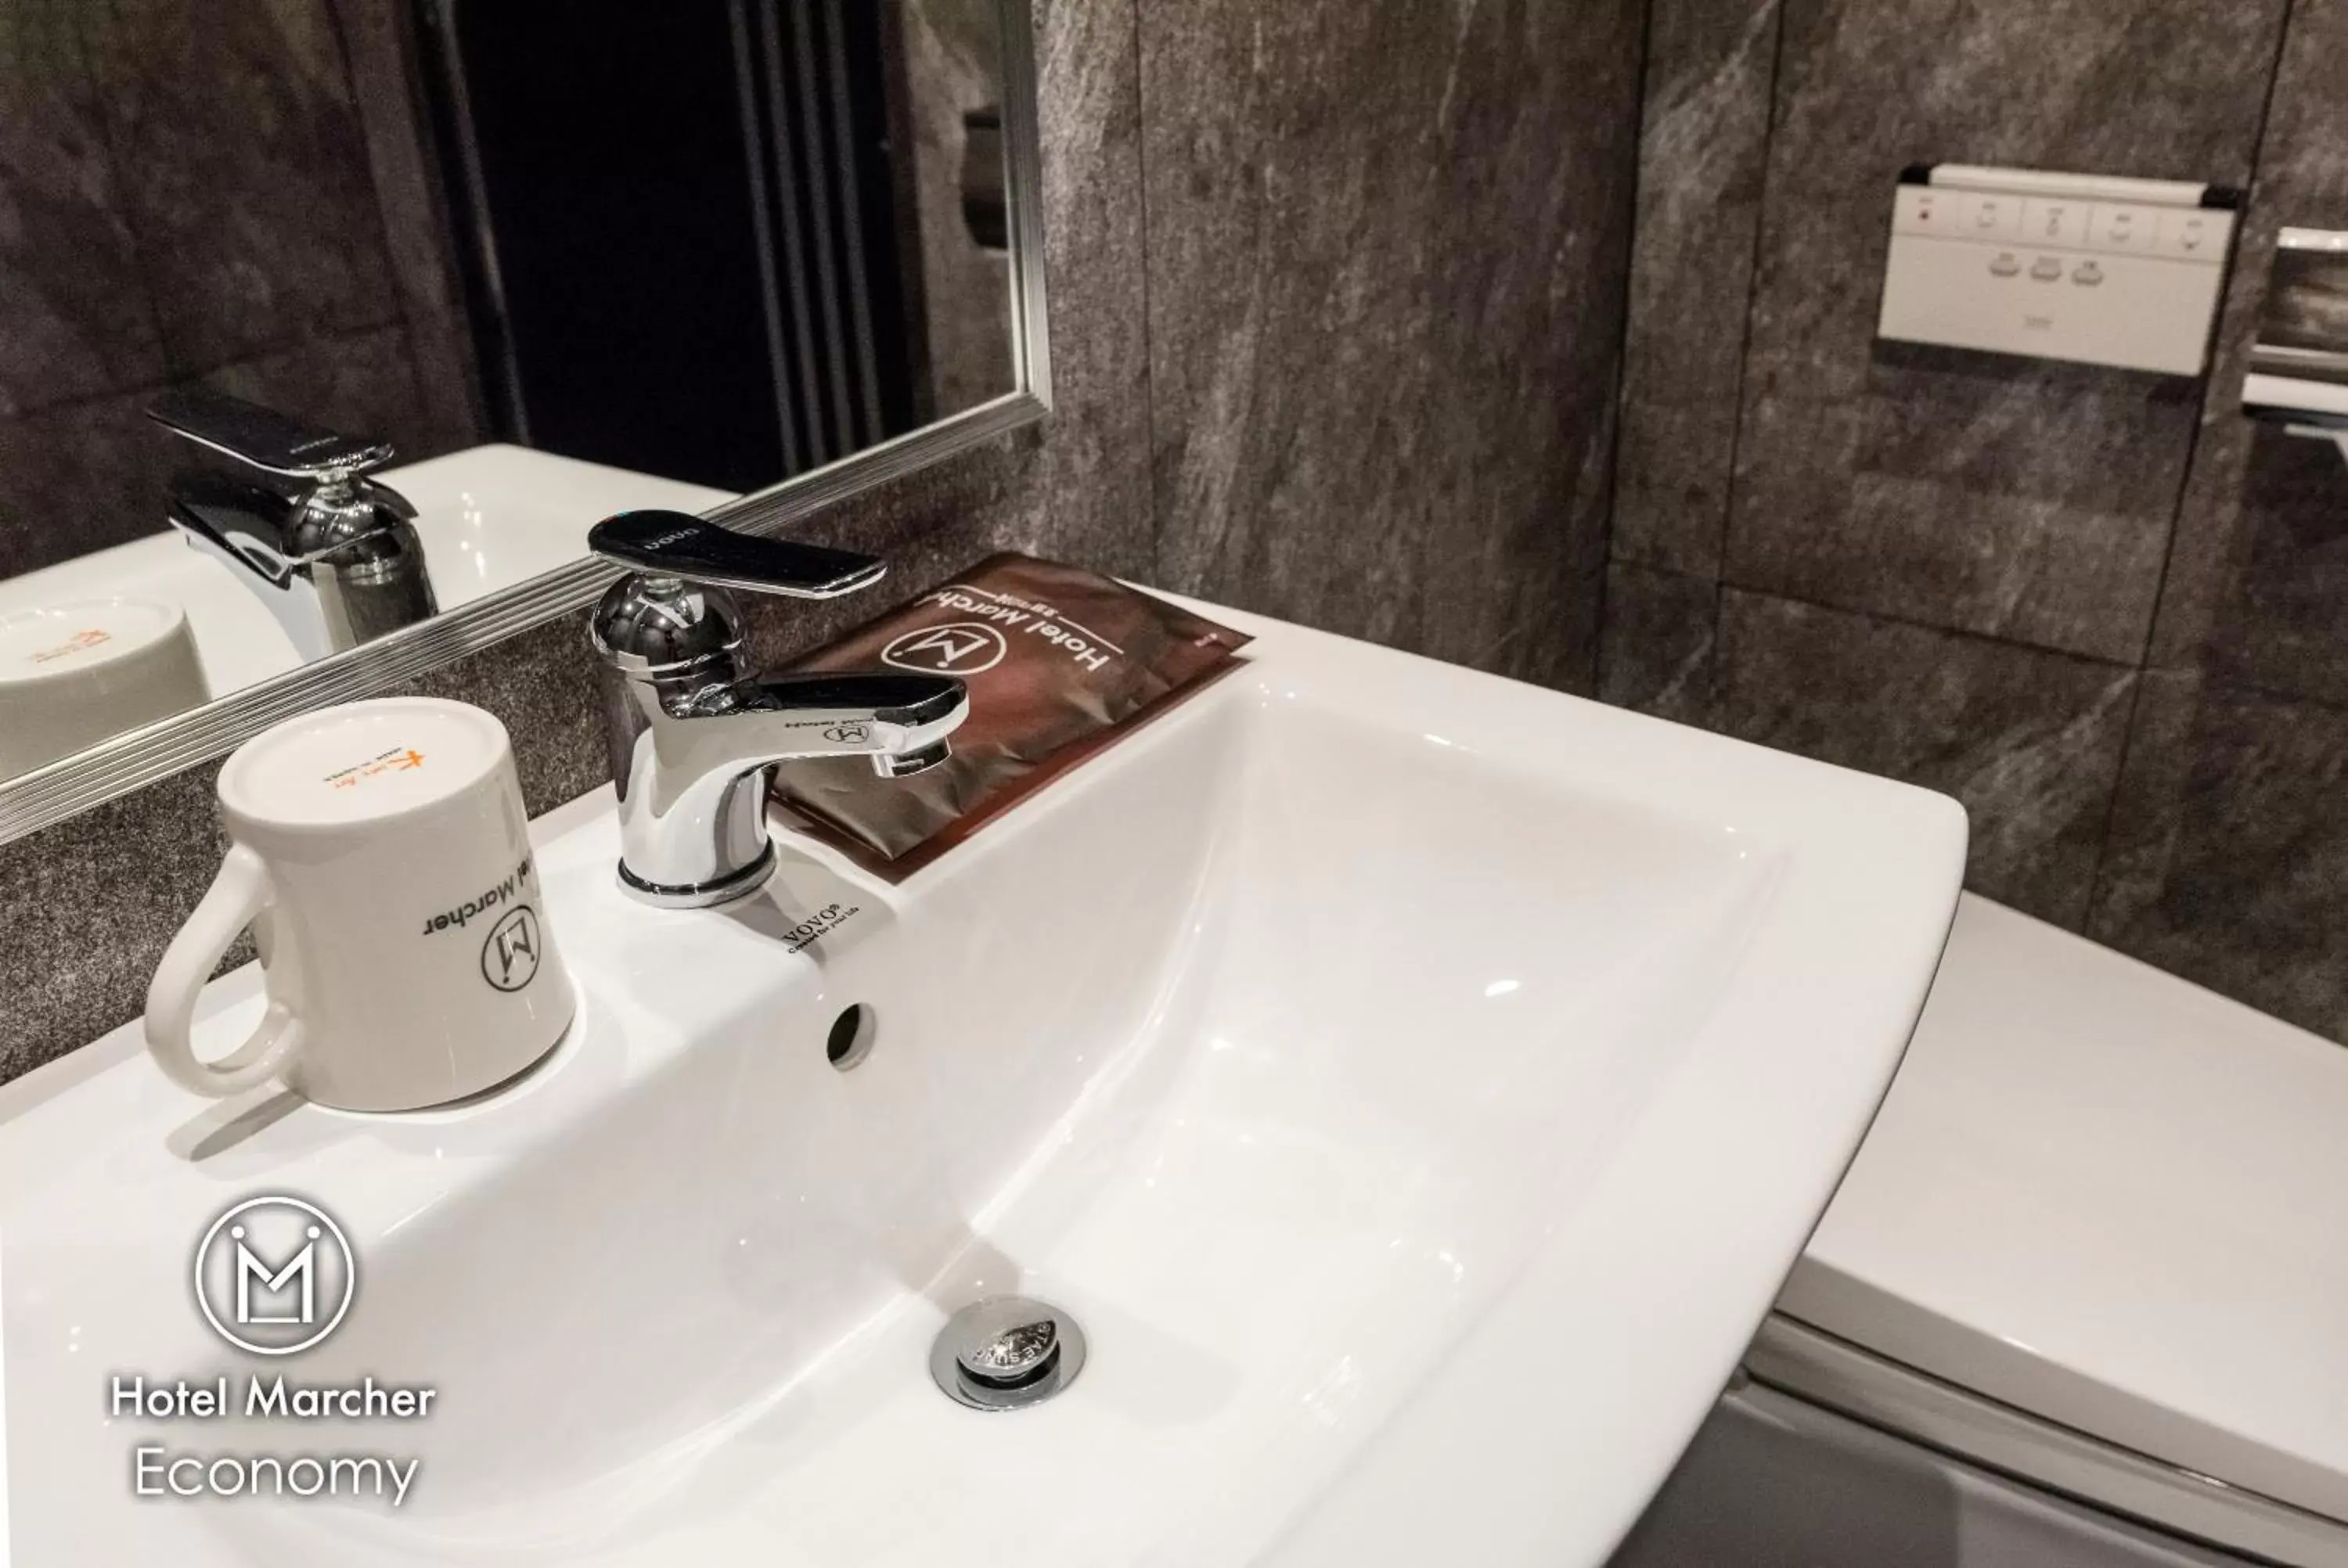 Area and facilities, Bathroom in Hotel Marcher